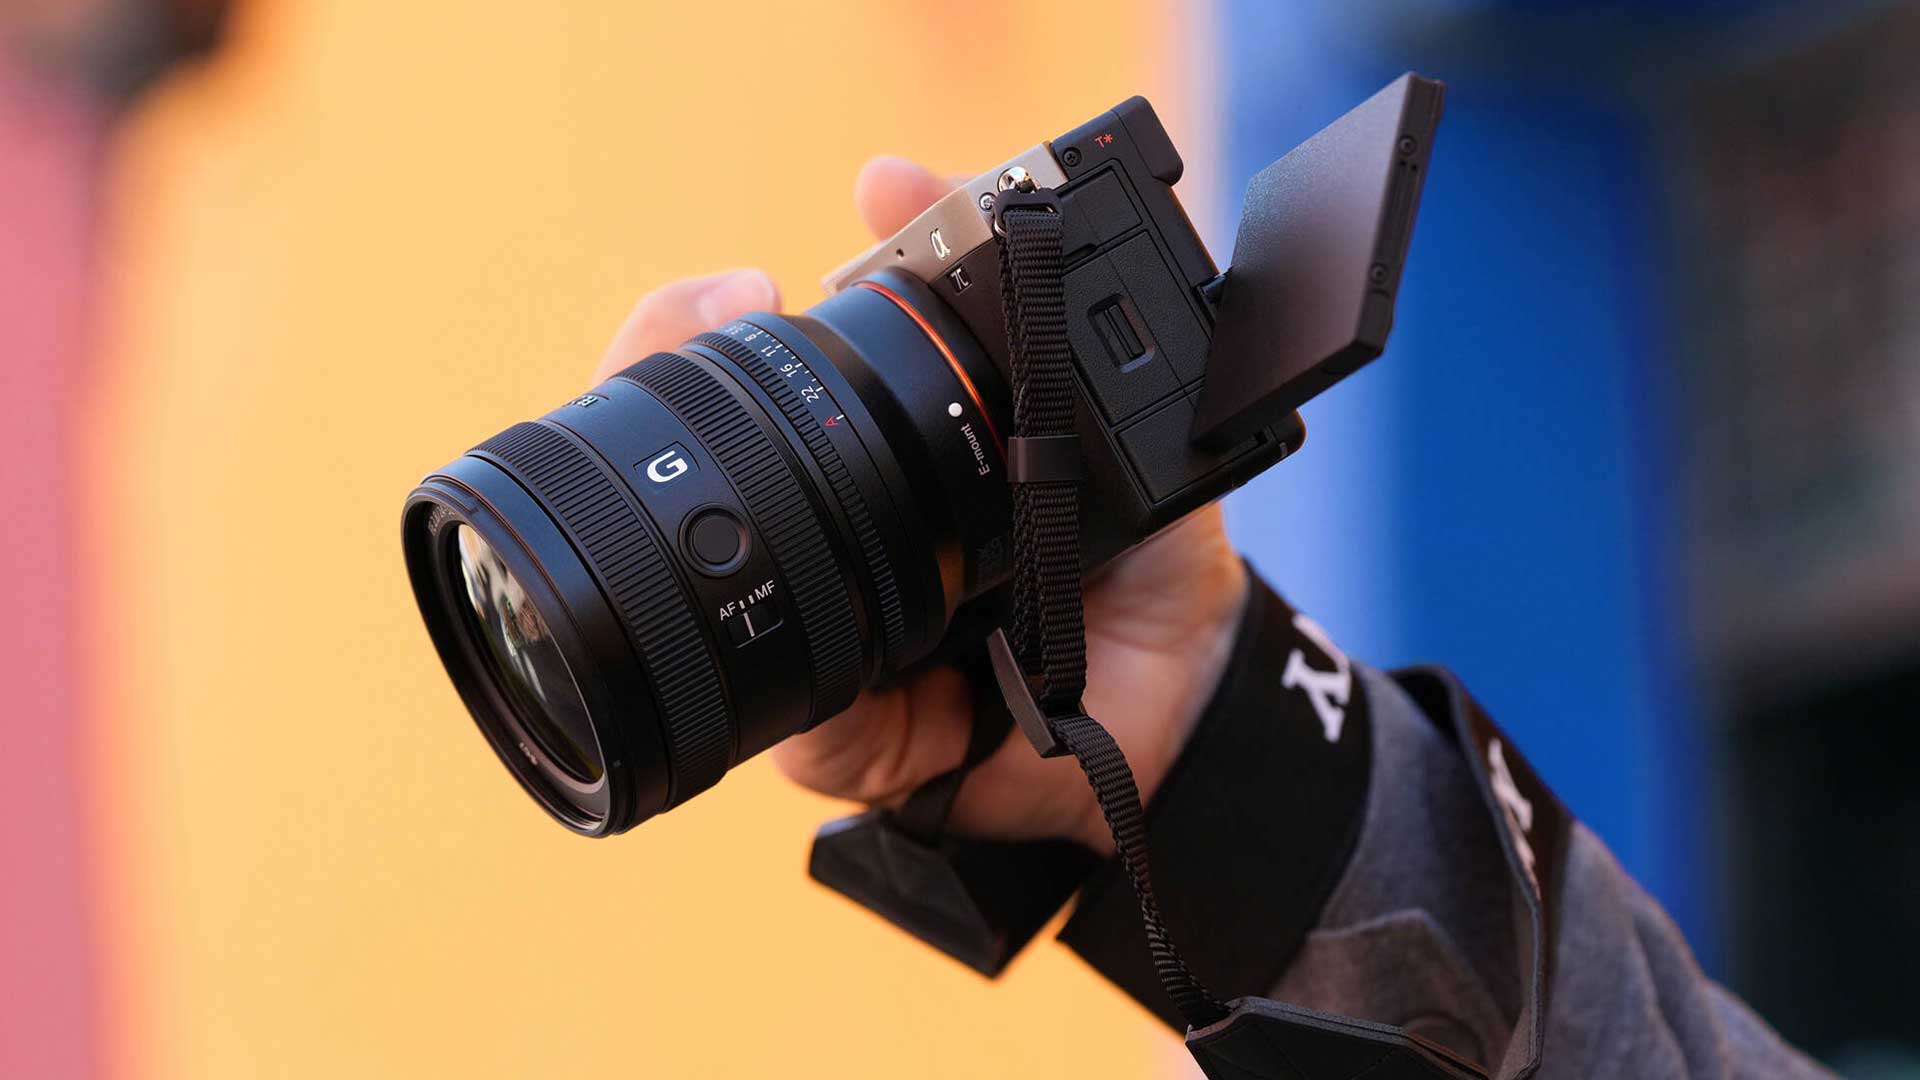 Рука фотографа держит камеру с объективом Sony FE 24-50mm f/2.8 G